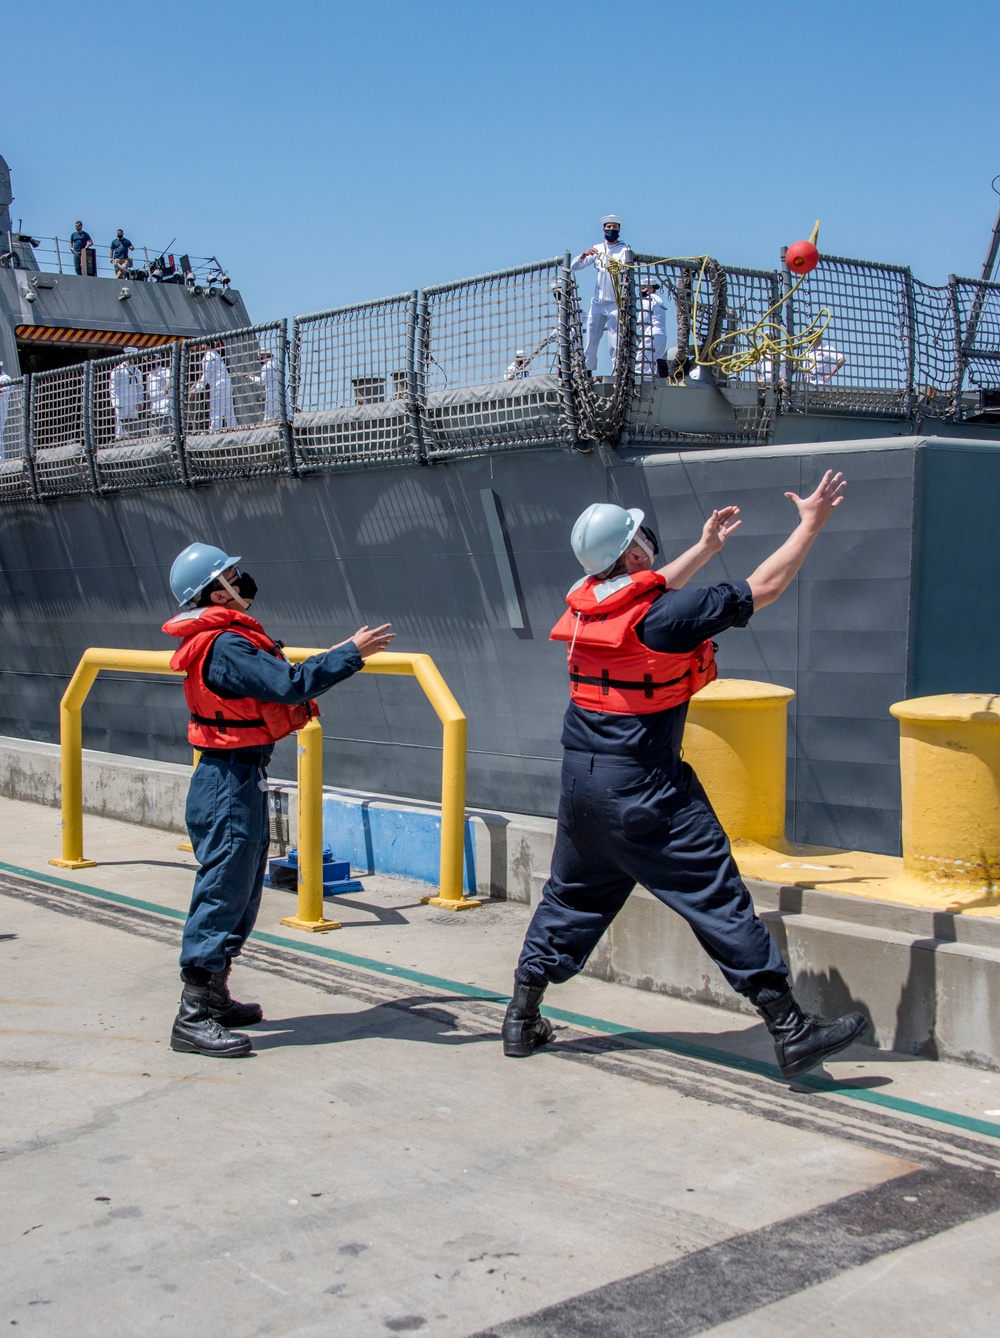 USS Freedom Returns From Deployment